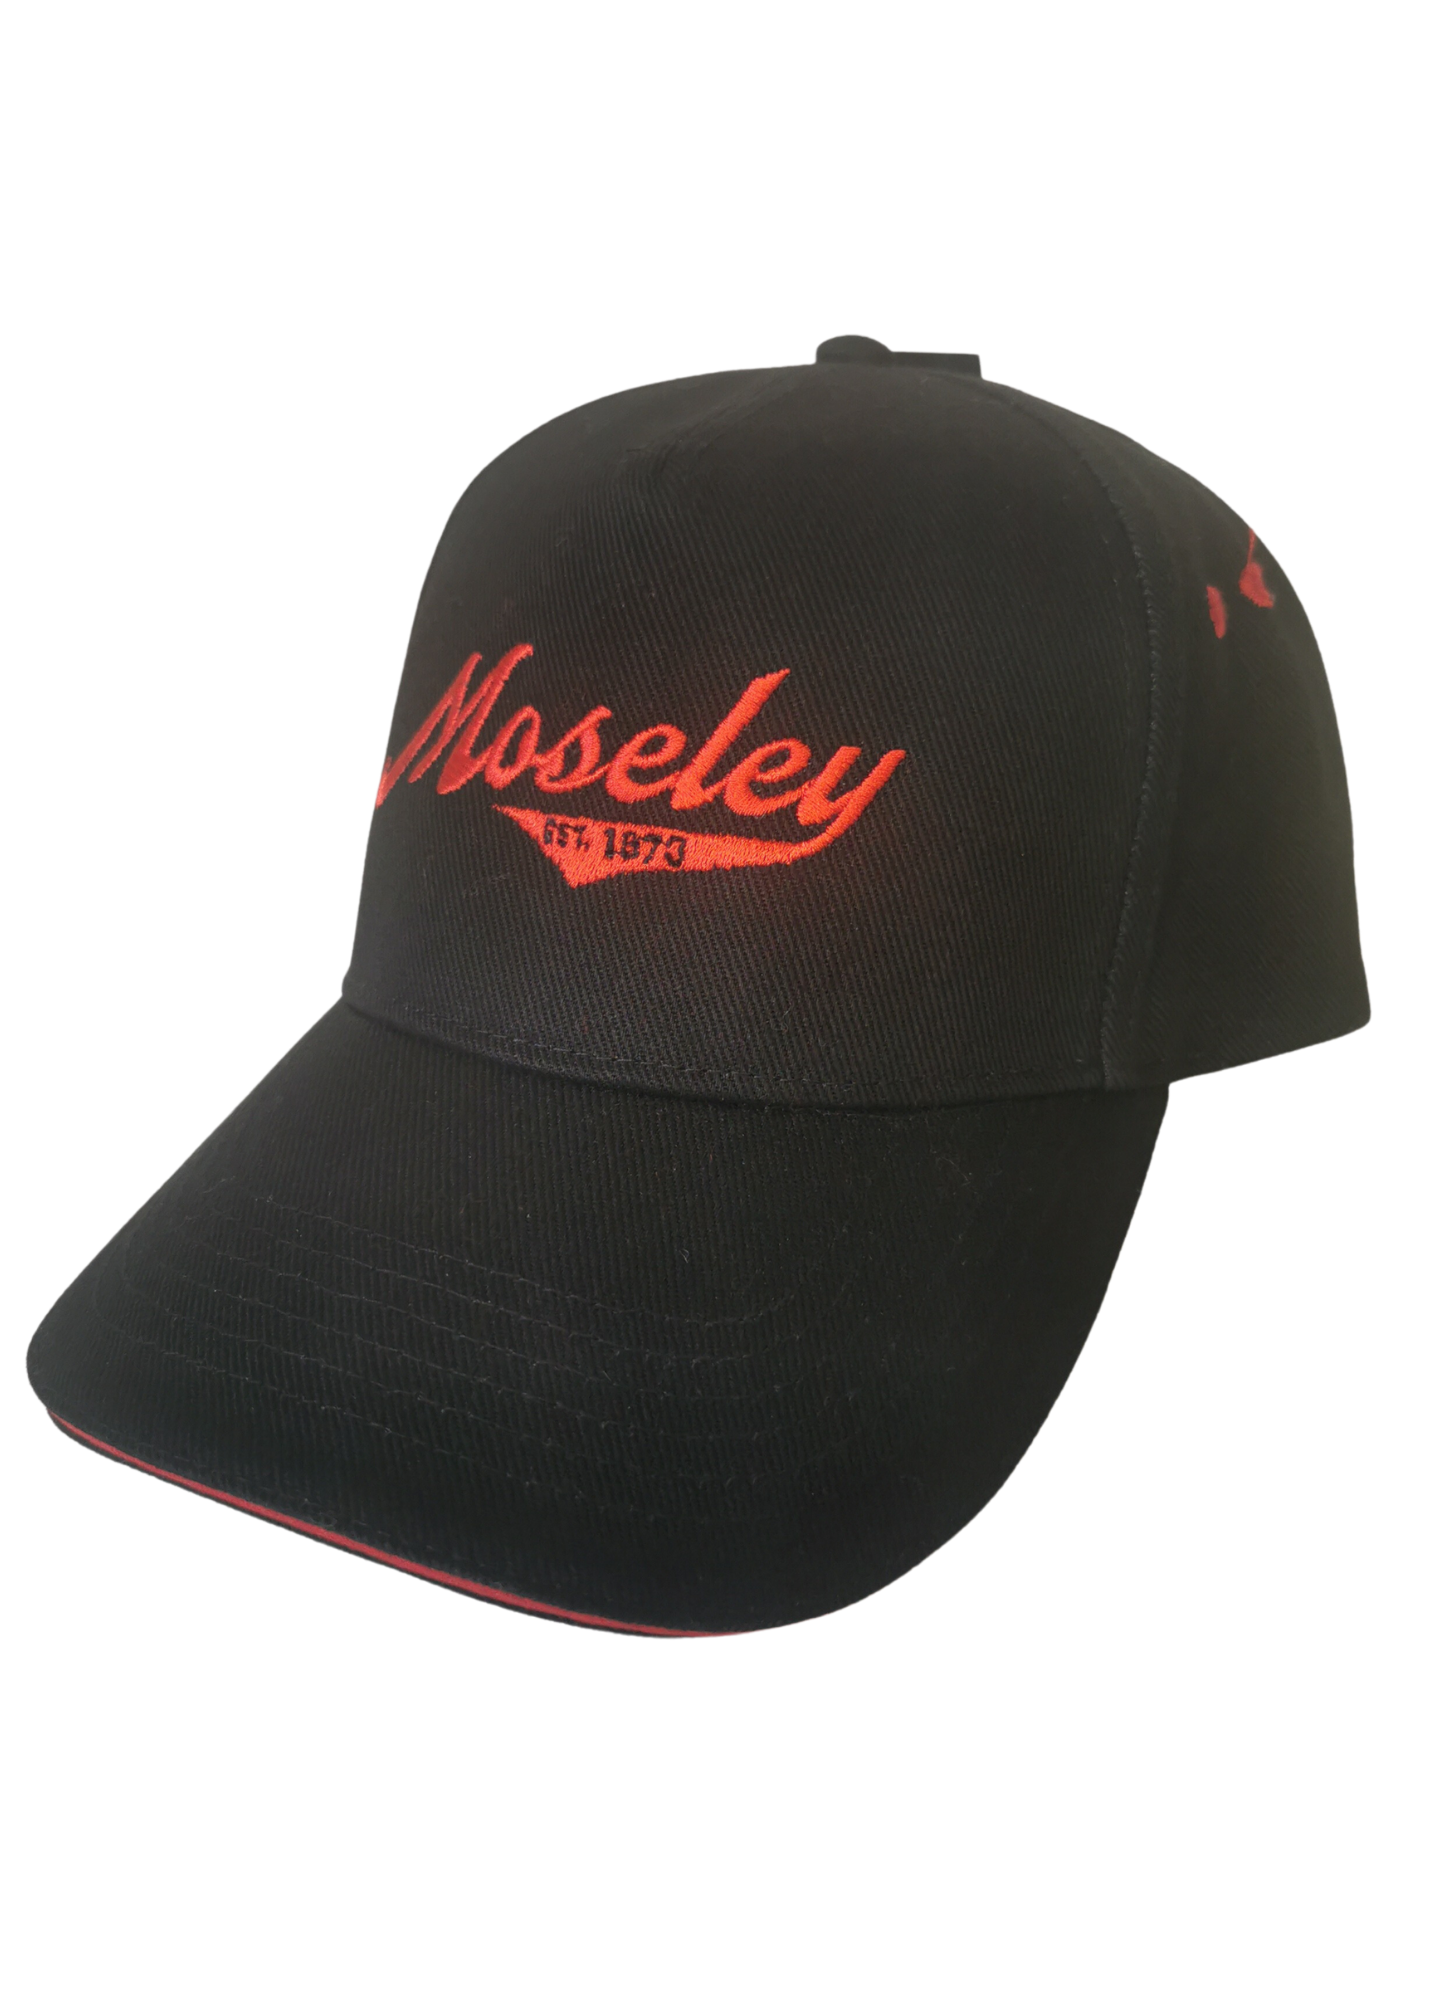 150th Anniversary Moseley Cap (Black)